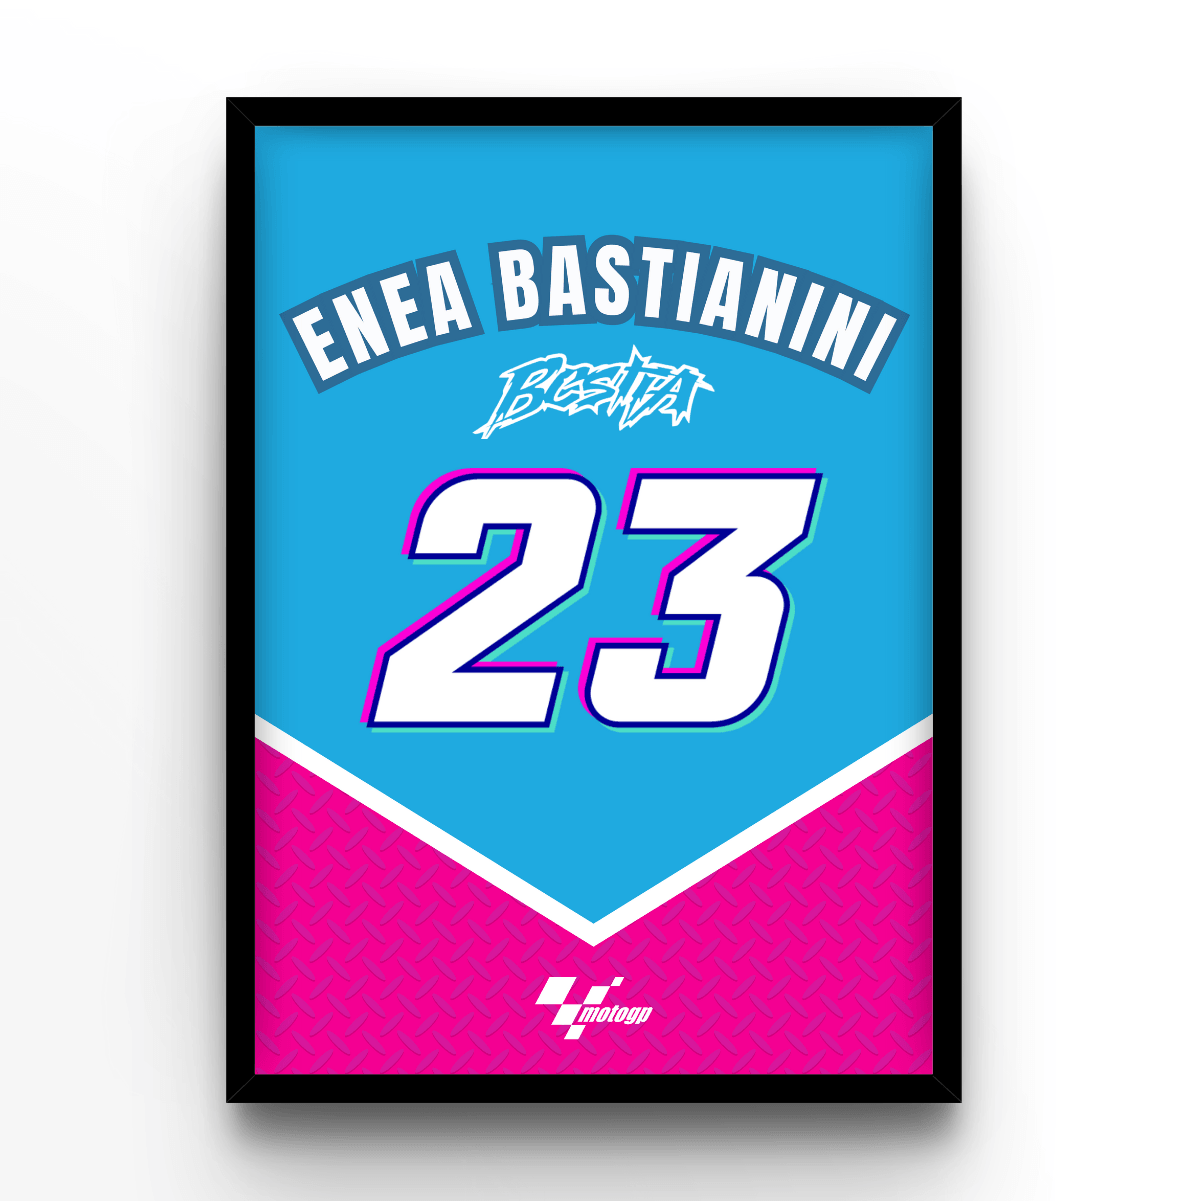 Enea Bastianini - A4, A3, A2 Posters Base - Poster Print Shop / Art Prints / PostersBase